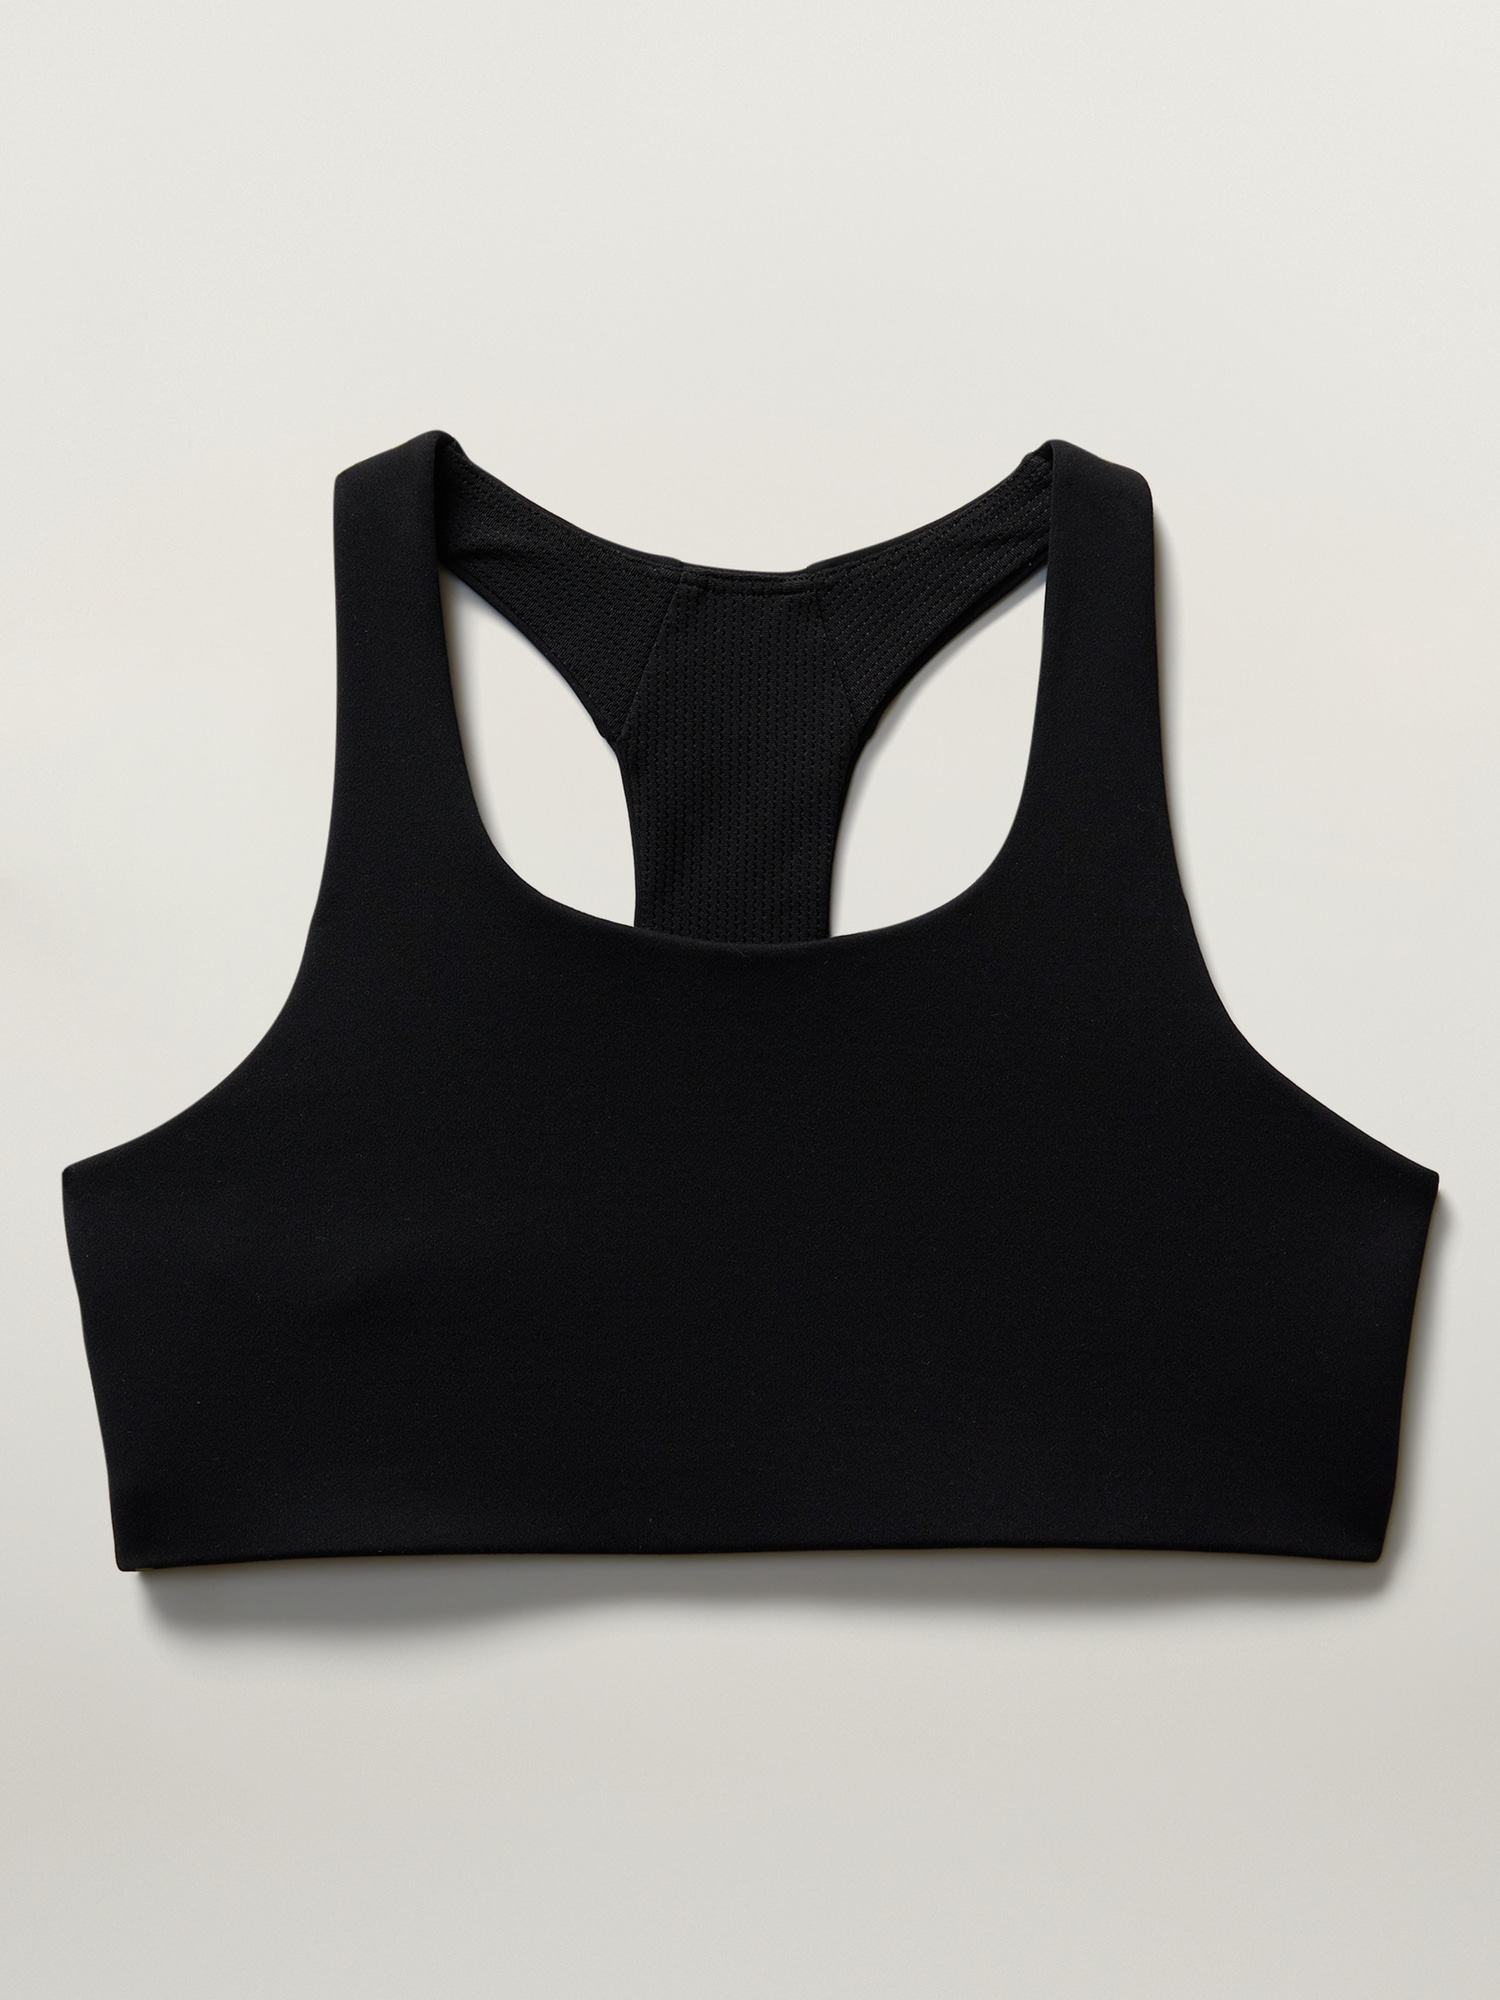 Athleta sports bra 34D black adjustable lightly padded non